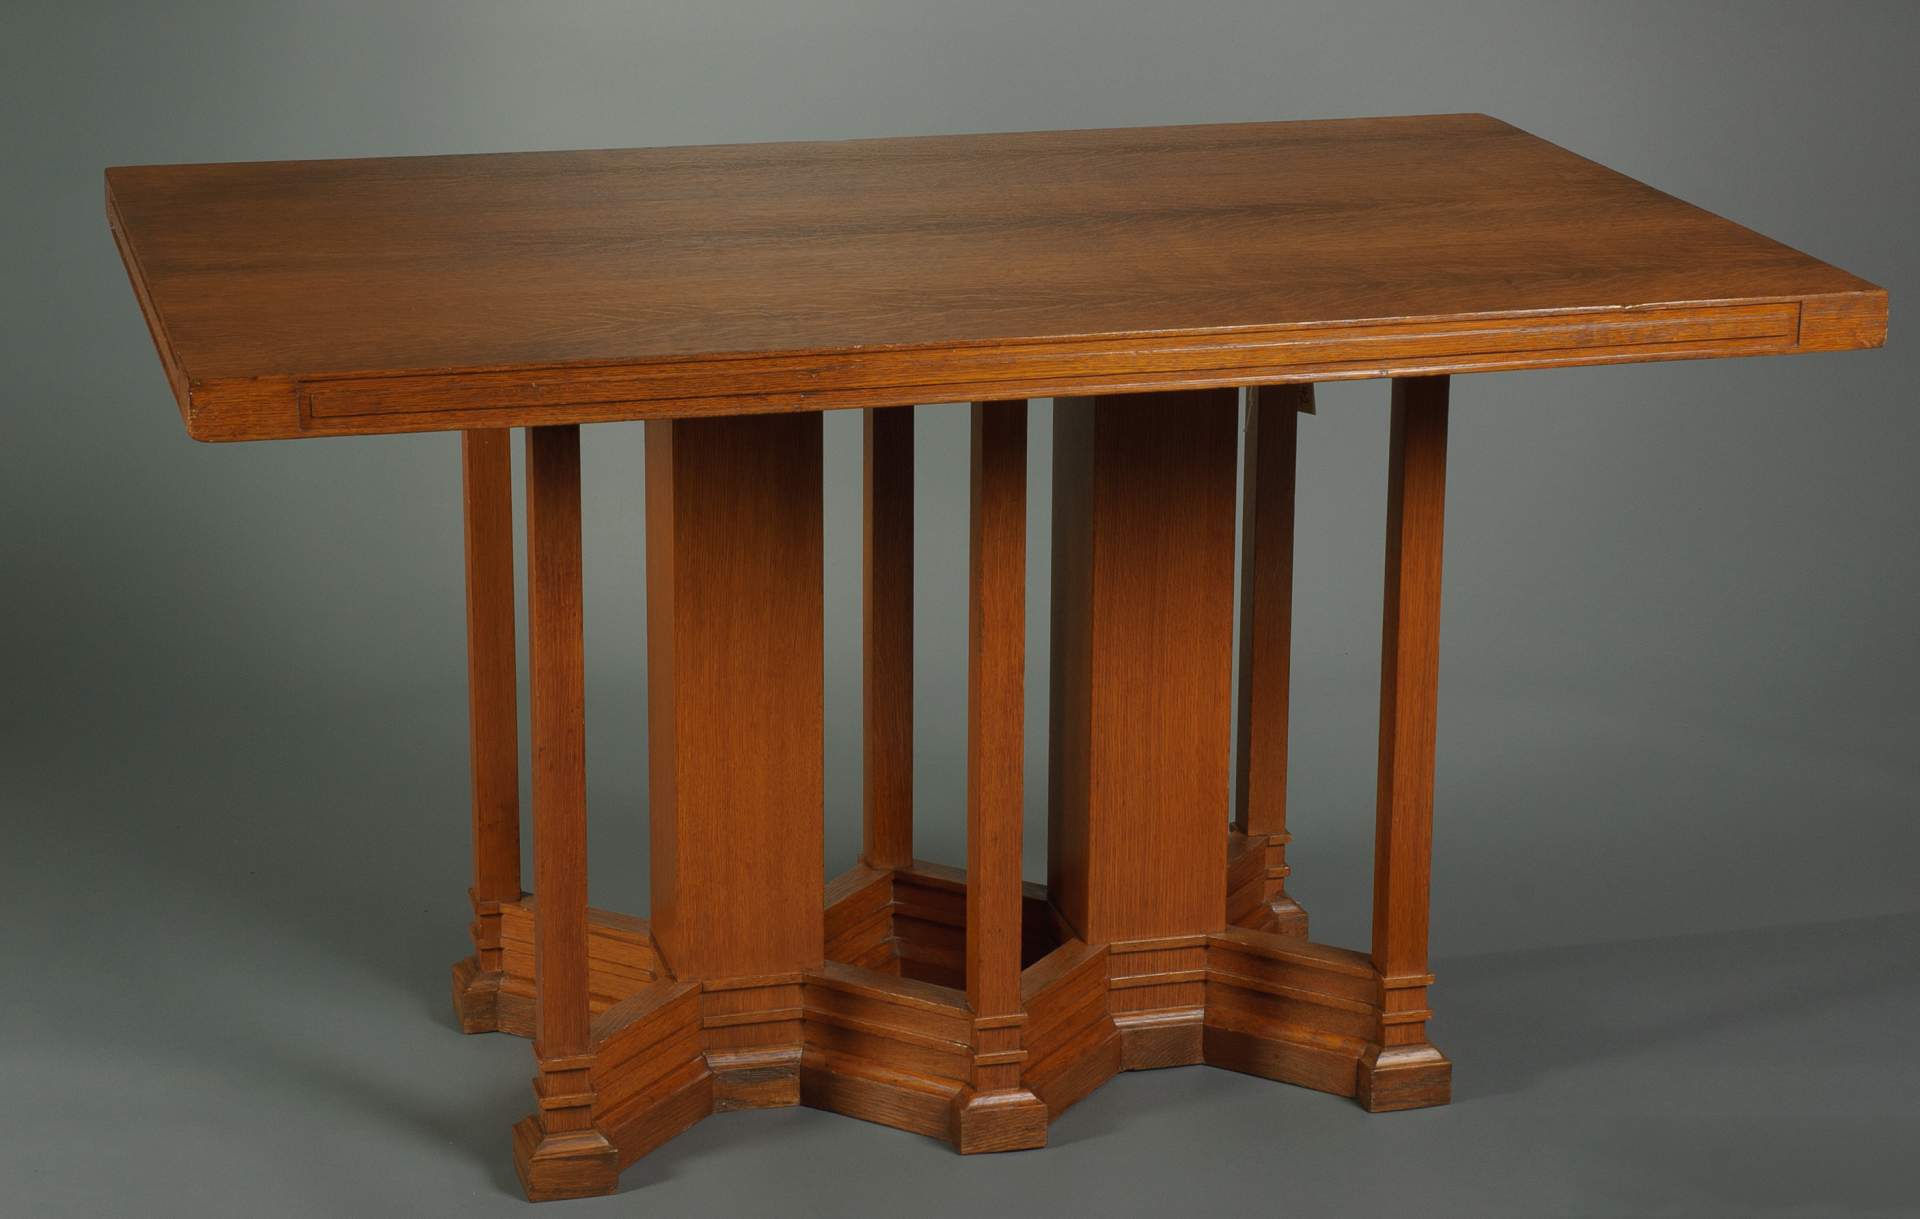 Table, column base